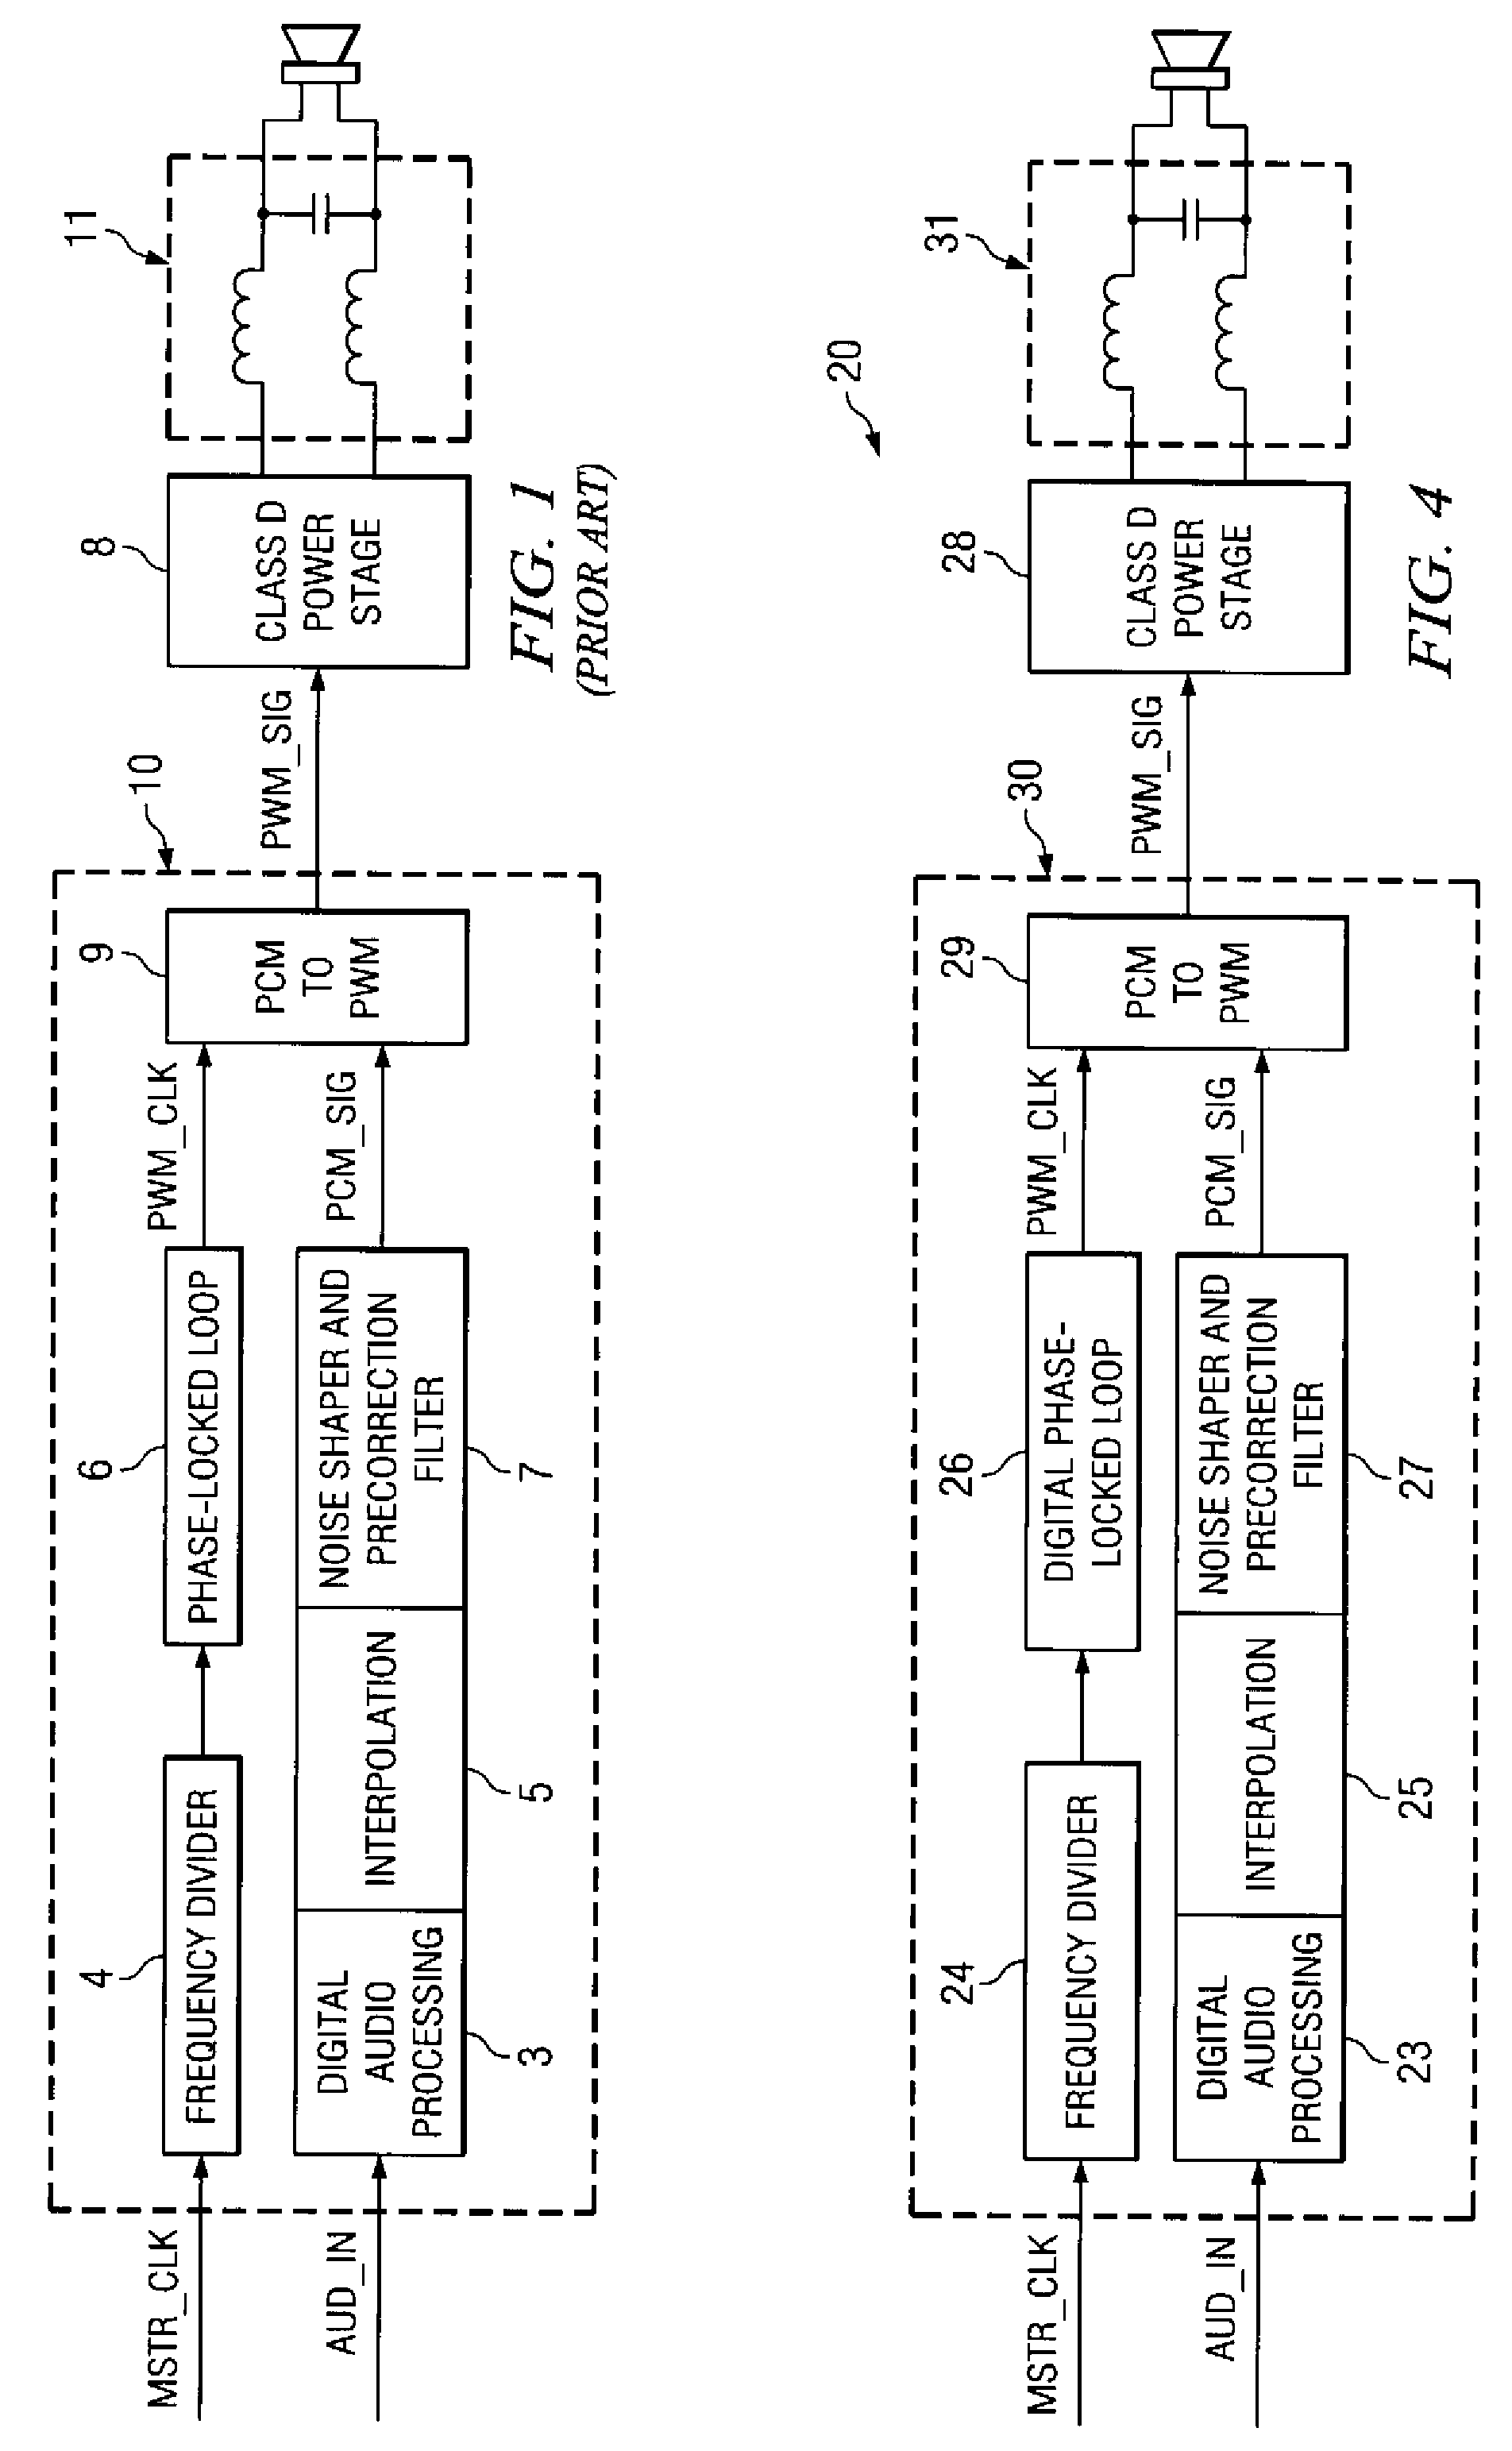 All-digital phase-locked loop for a digital pulse-width modulator